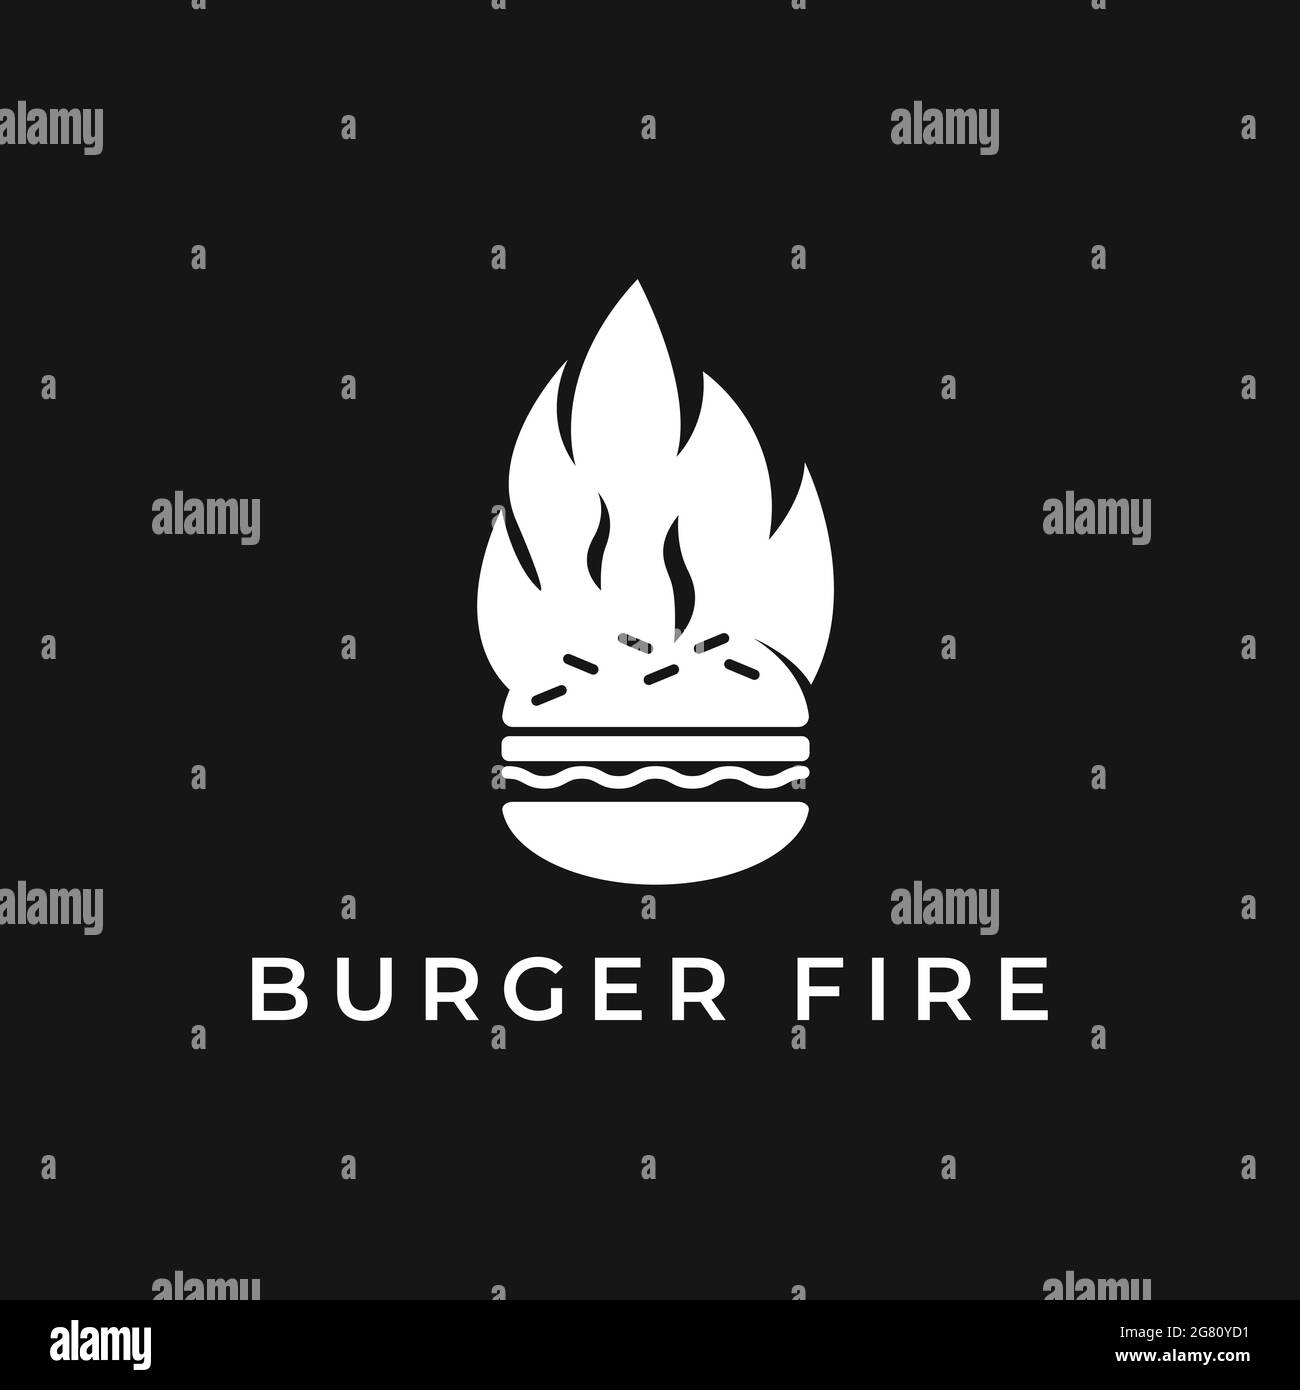 Burger fire logo. Hamburger restaurant design, flat design, big burger with fire on a dark background. Stock Vector